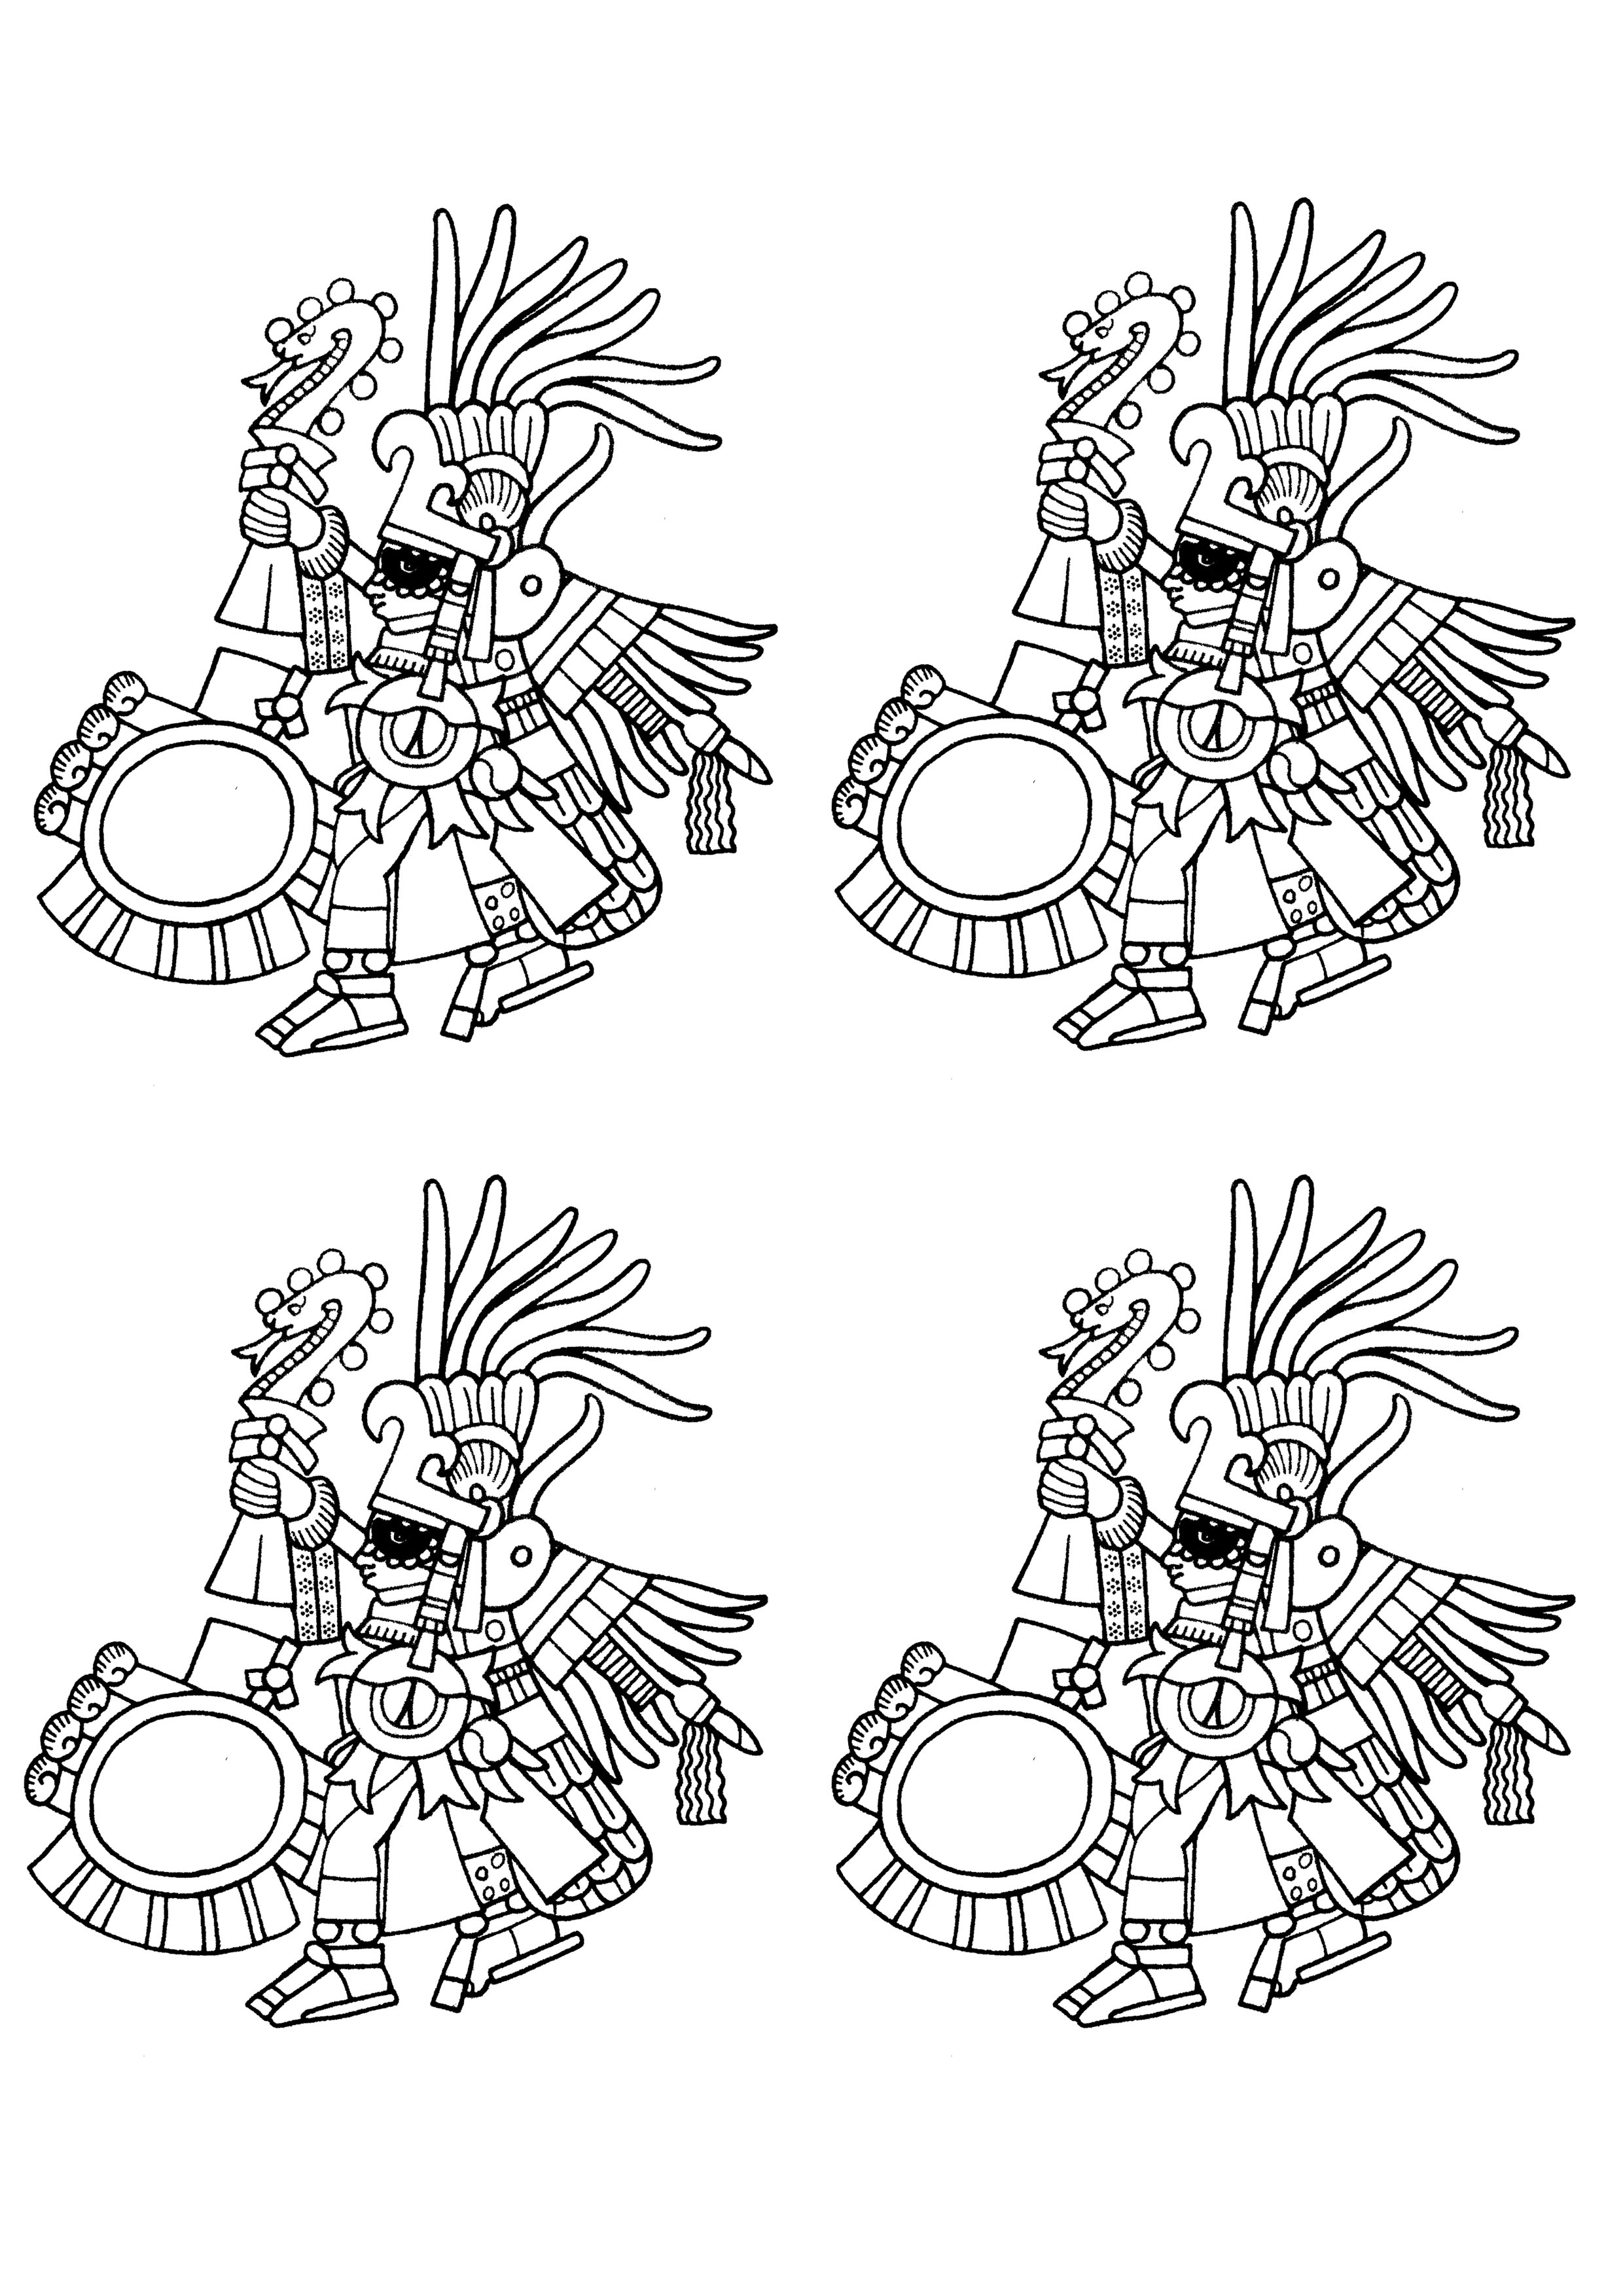 Huitzilopochtli, the Aztec supreme deity and God of War, brandishes aloft a Xiuhcoatl fire serpent staff. Version with 4 elements